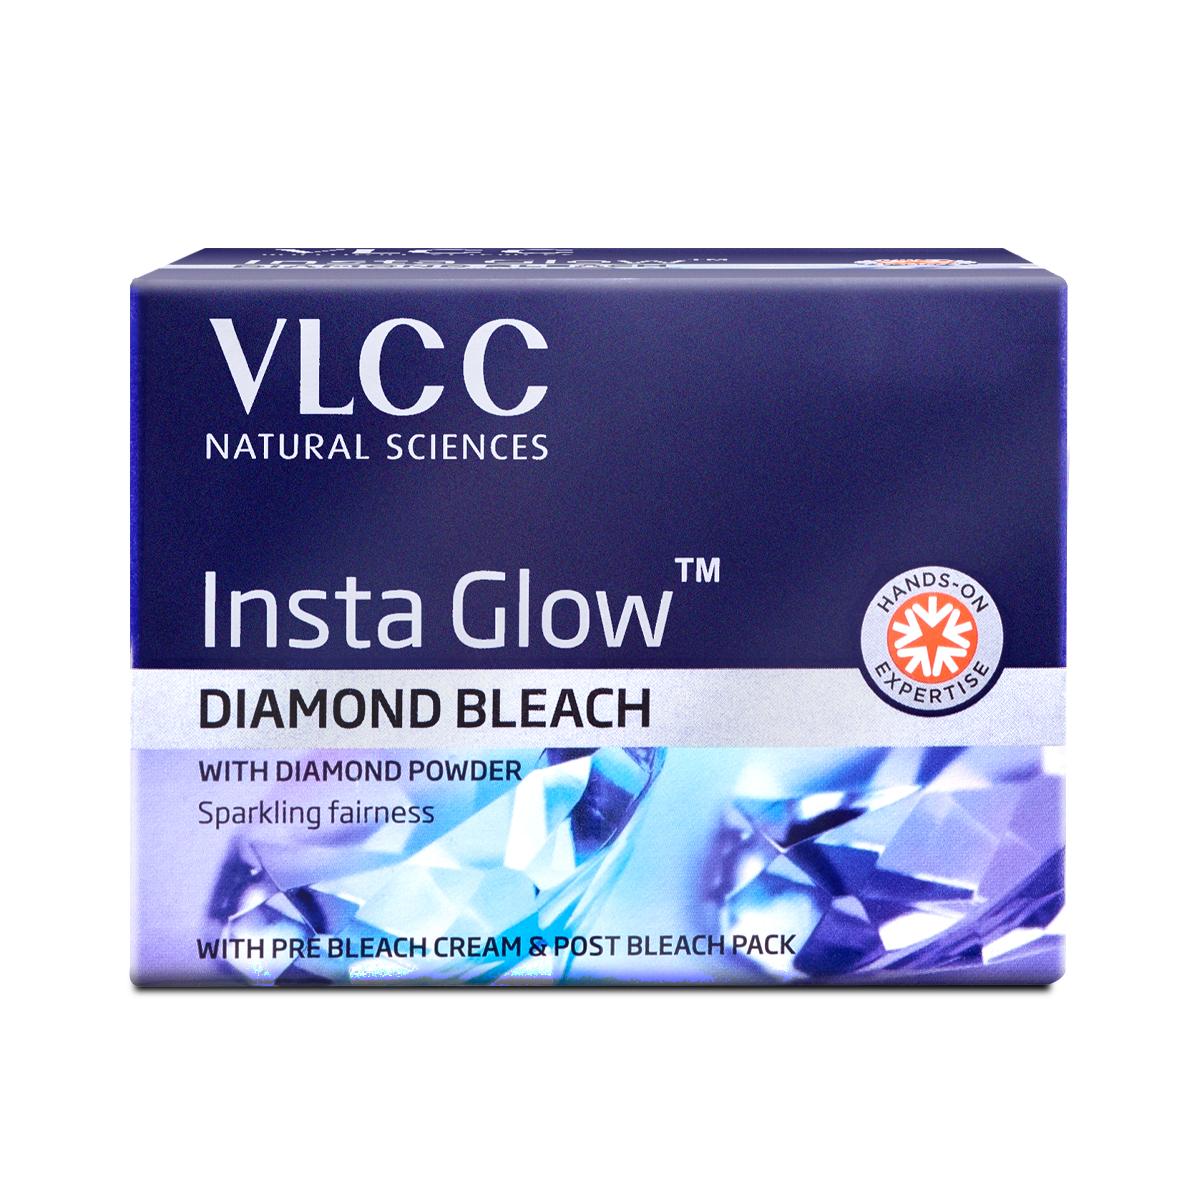 VLCC Insta Glow Diamond Bleach - Reveal Radiant Skin with Diamond Brightness